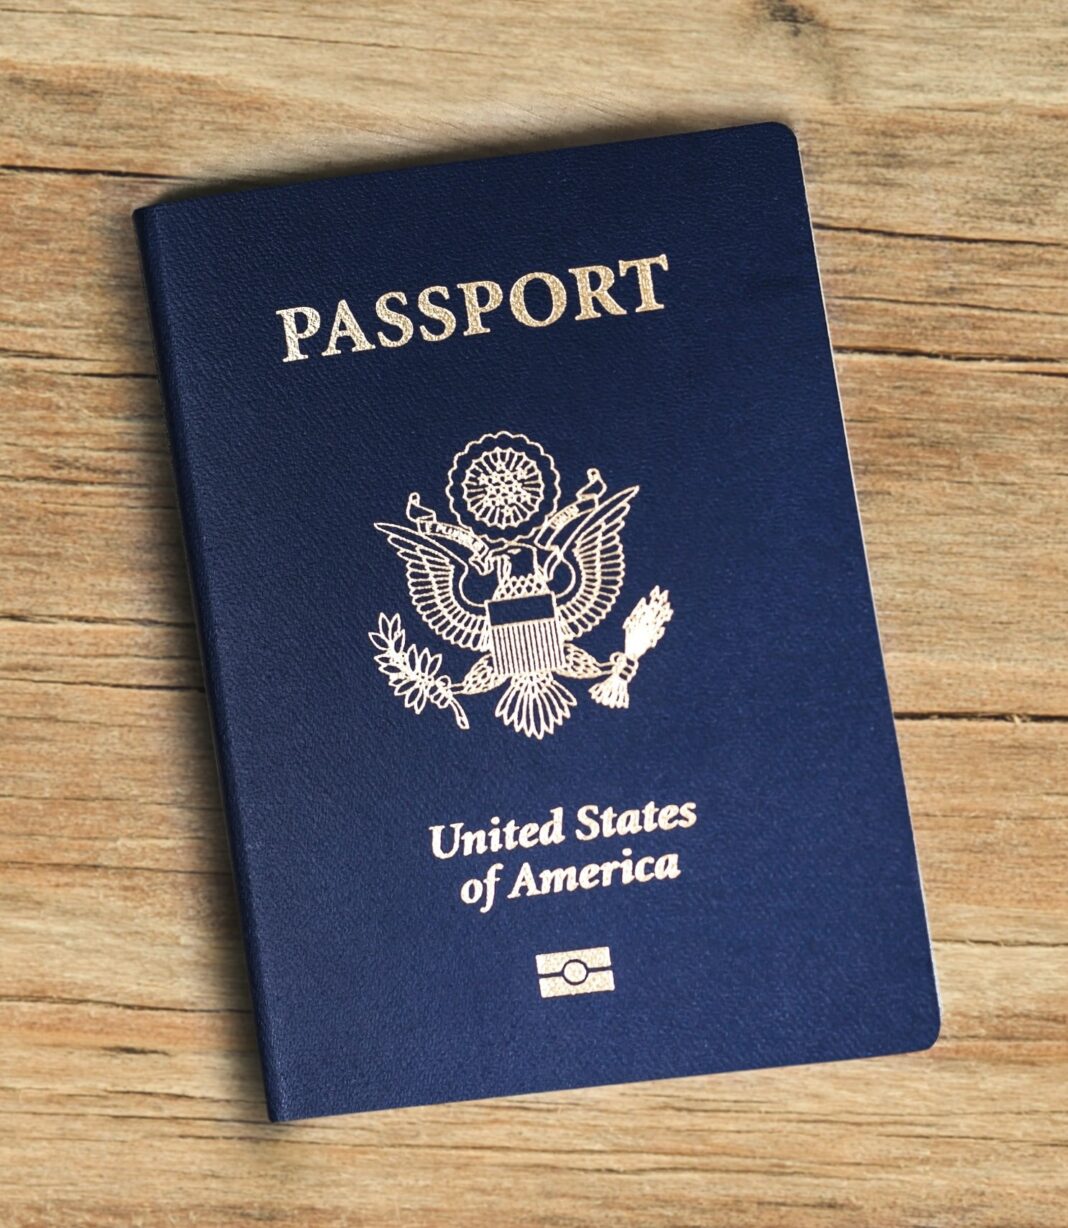 photo of a U.S. passport cover